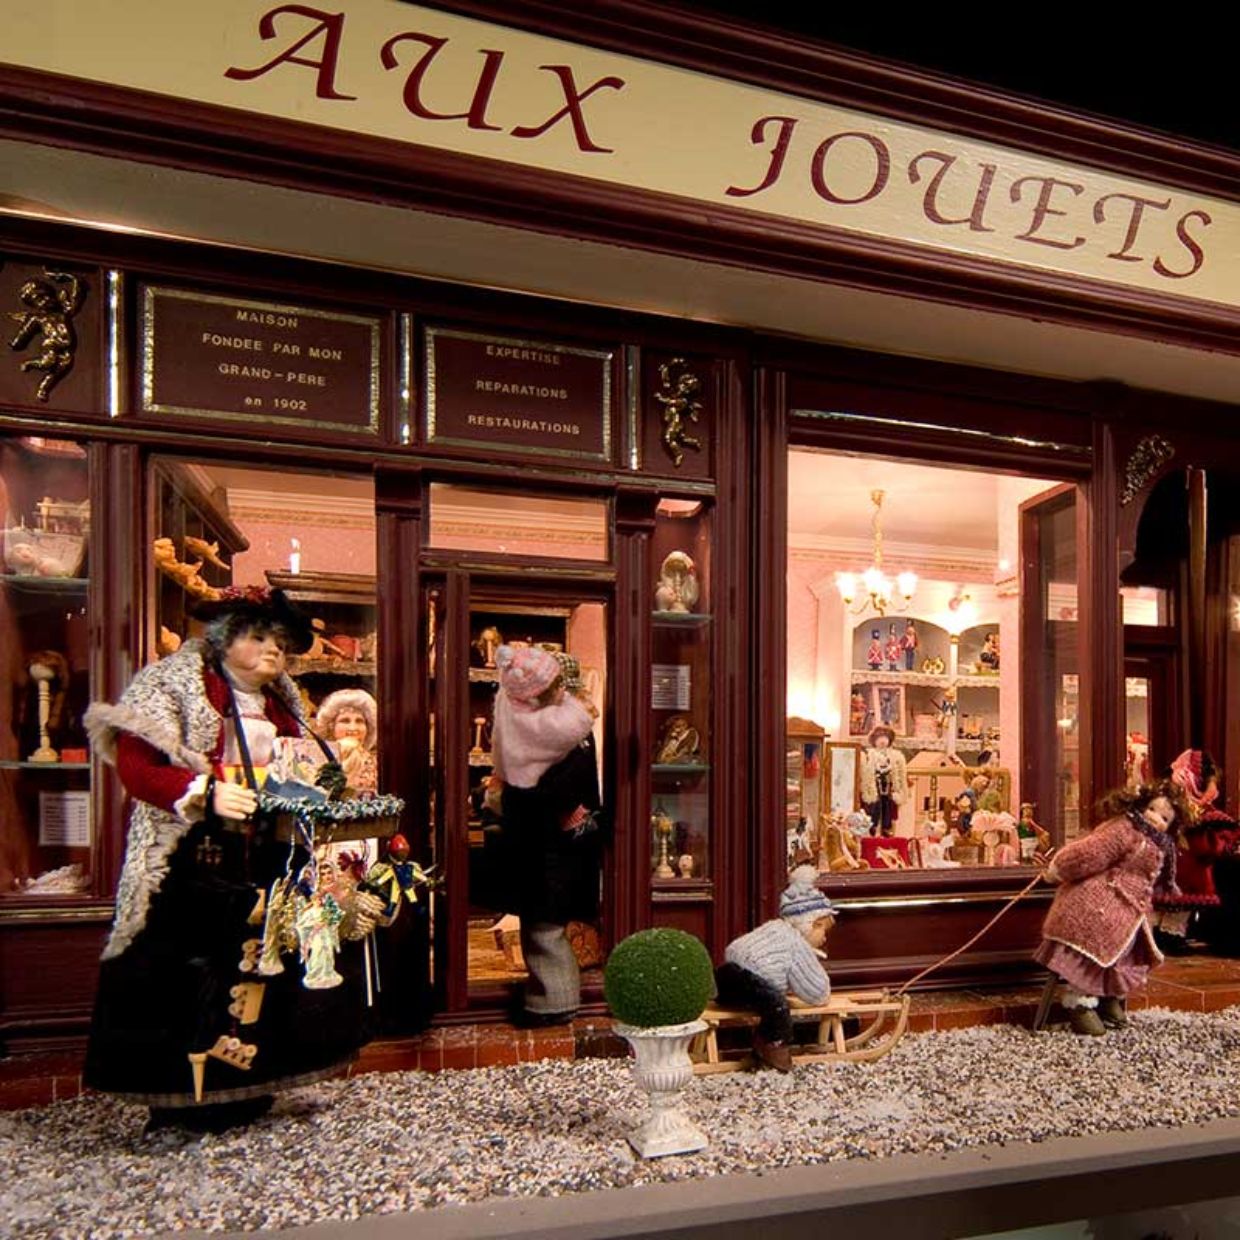 Toy shop, 1995, France